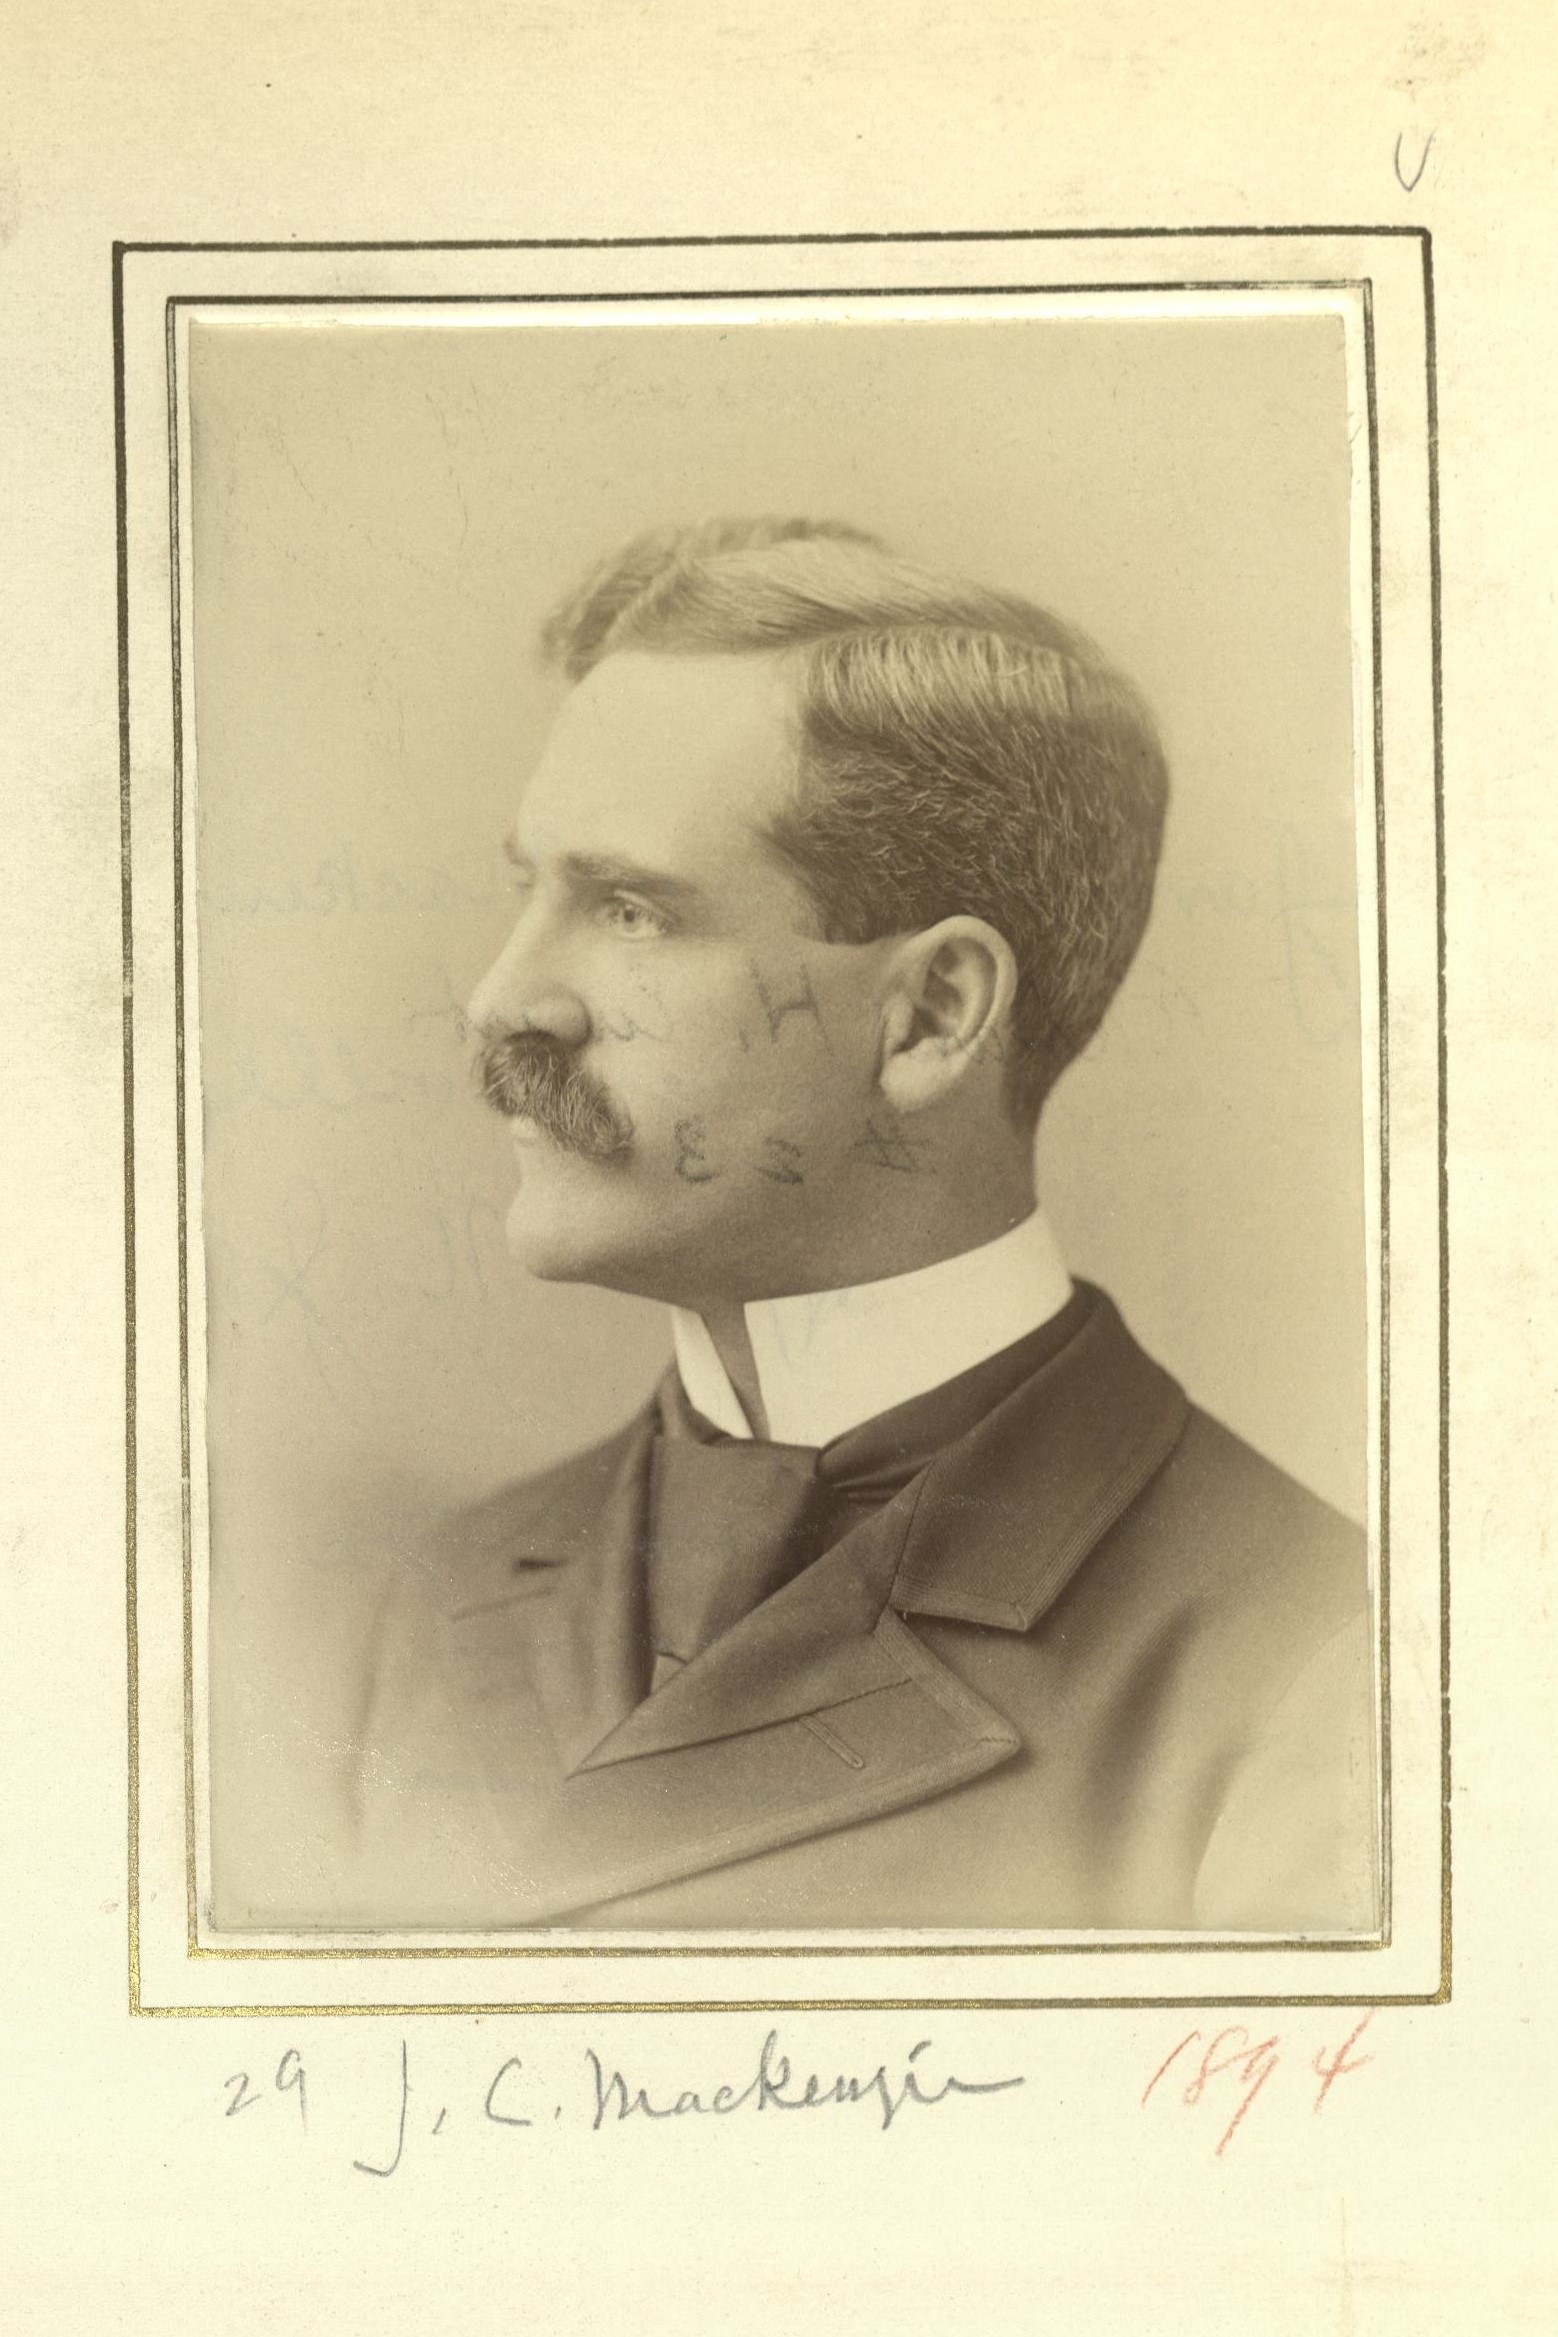 Member portrait of James C. Mackenzie